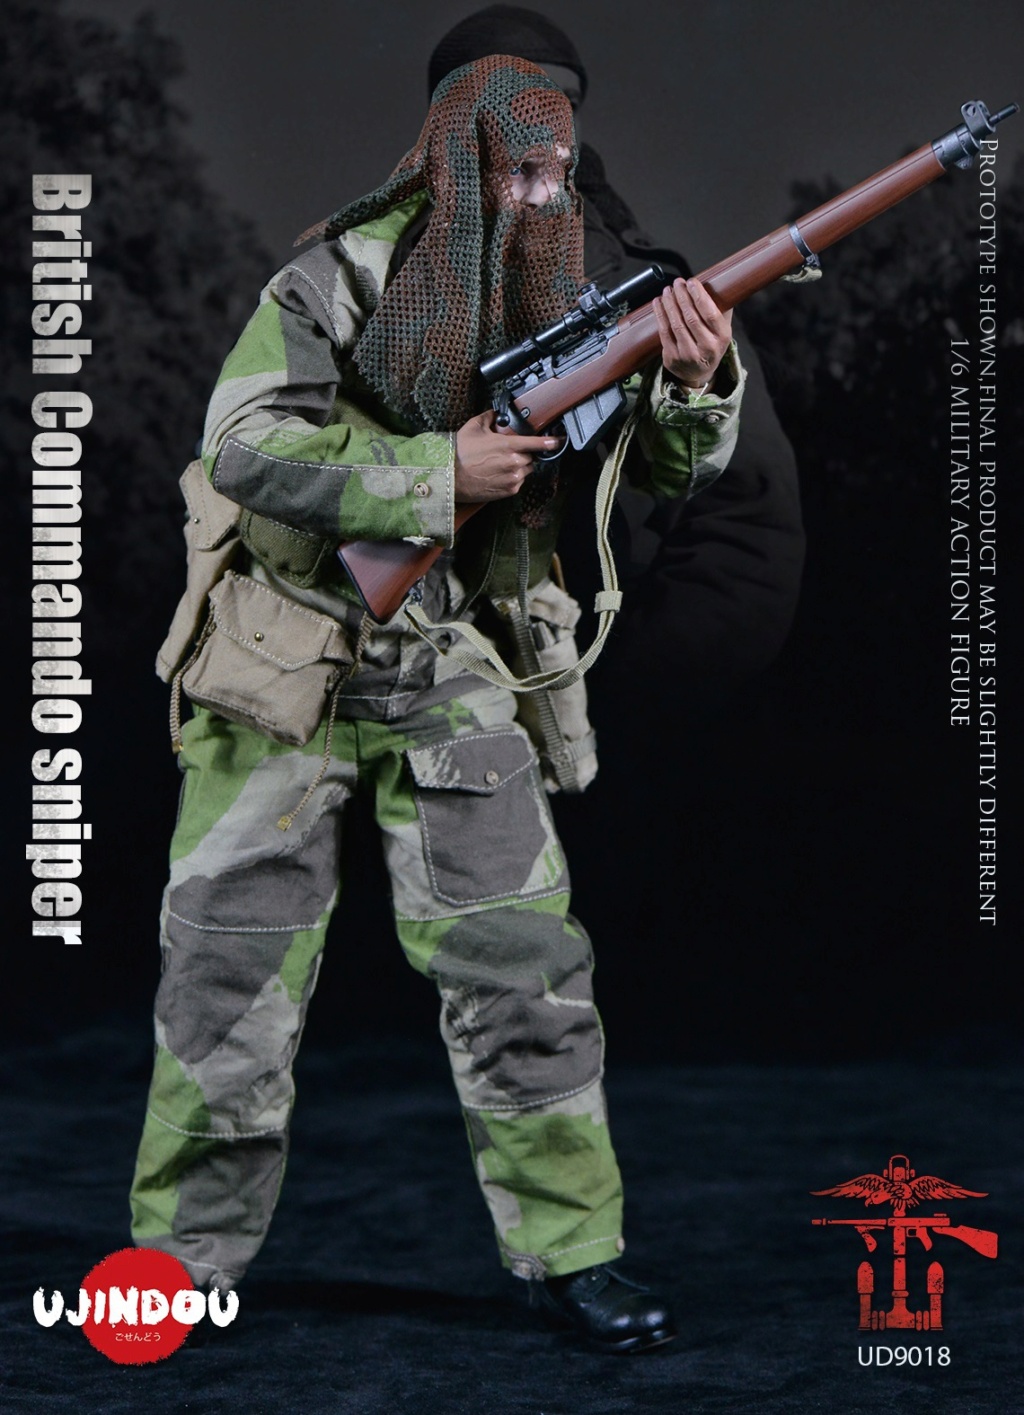 ujindou - NEW PRODUCT: UJINDOU: UD9018 1/6 Scale WWII British Commando Sniper 1944 13490410